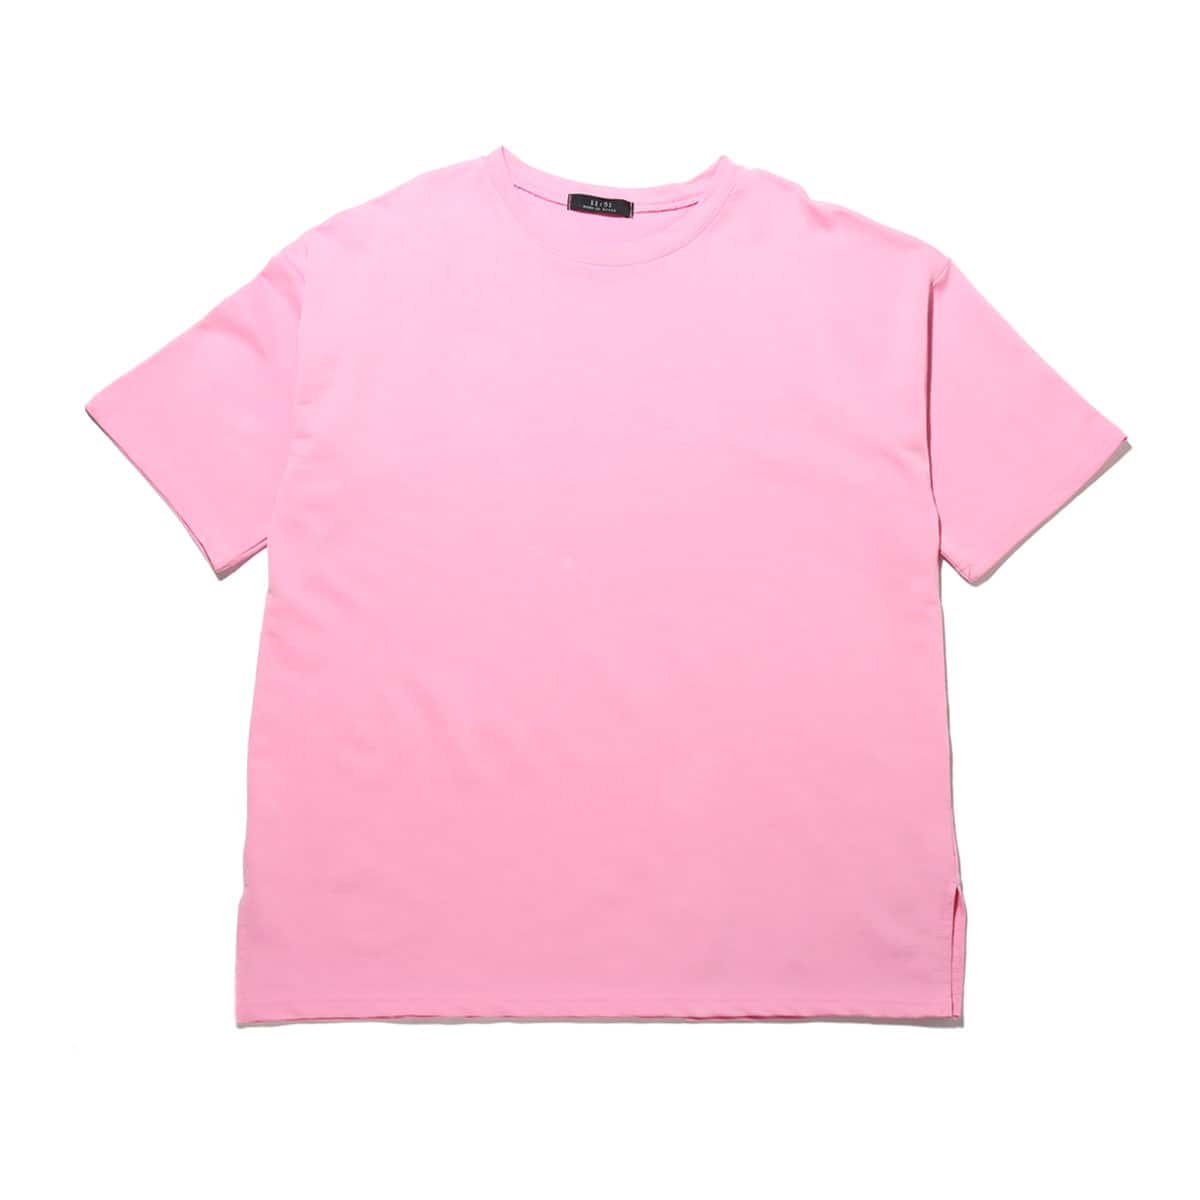 atmos pink カラー スウェット セットアップ PINK 20SU-I_photo_large